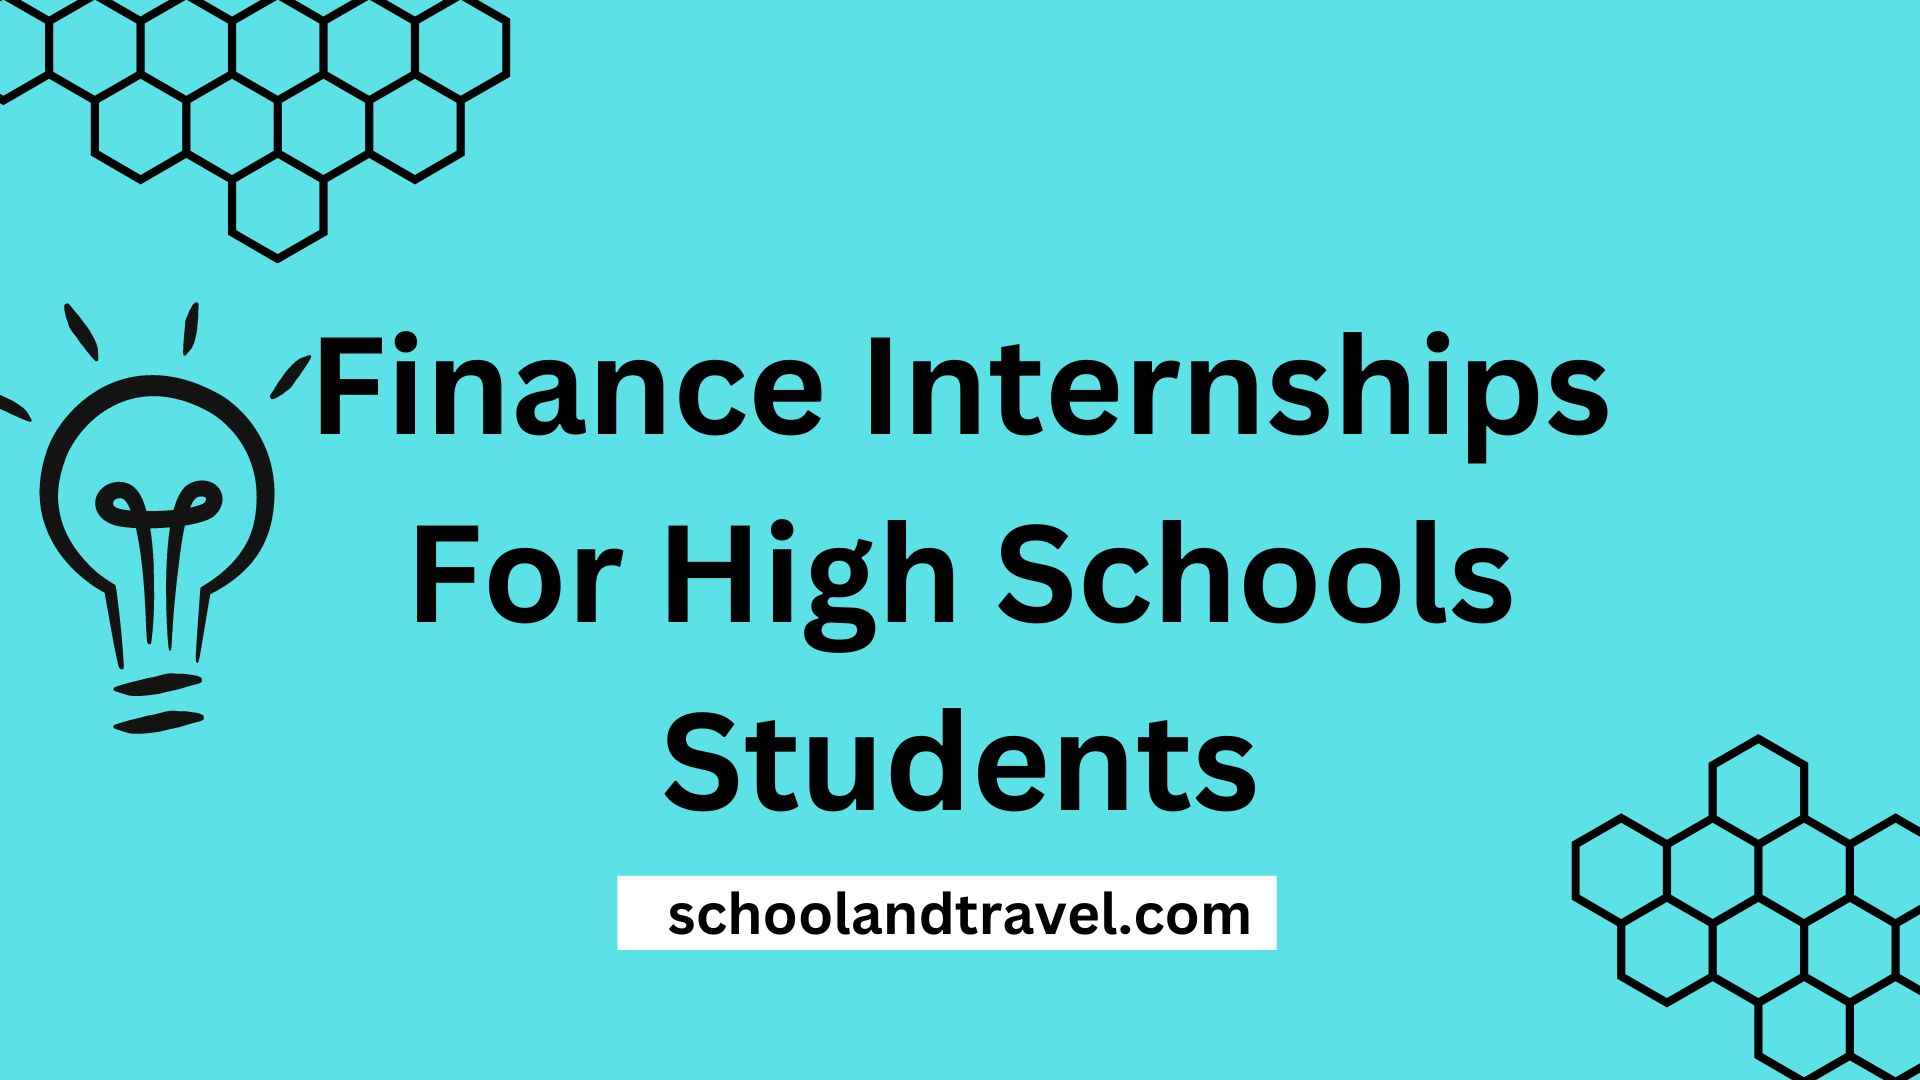 Finance Internships For High Schools Students